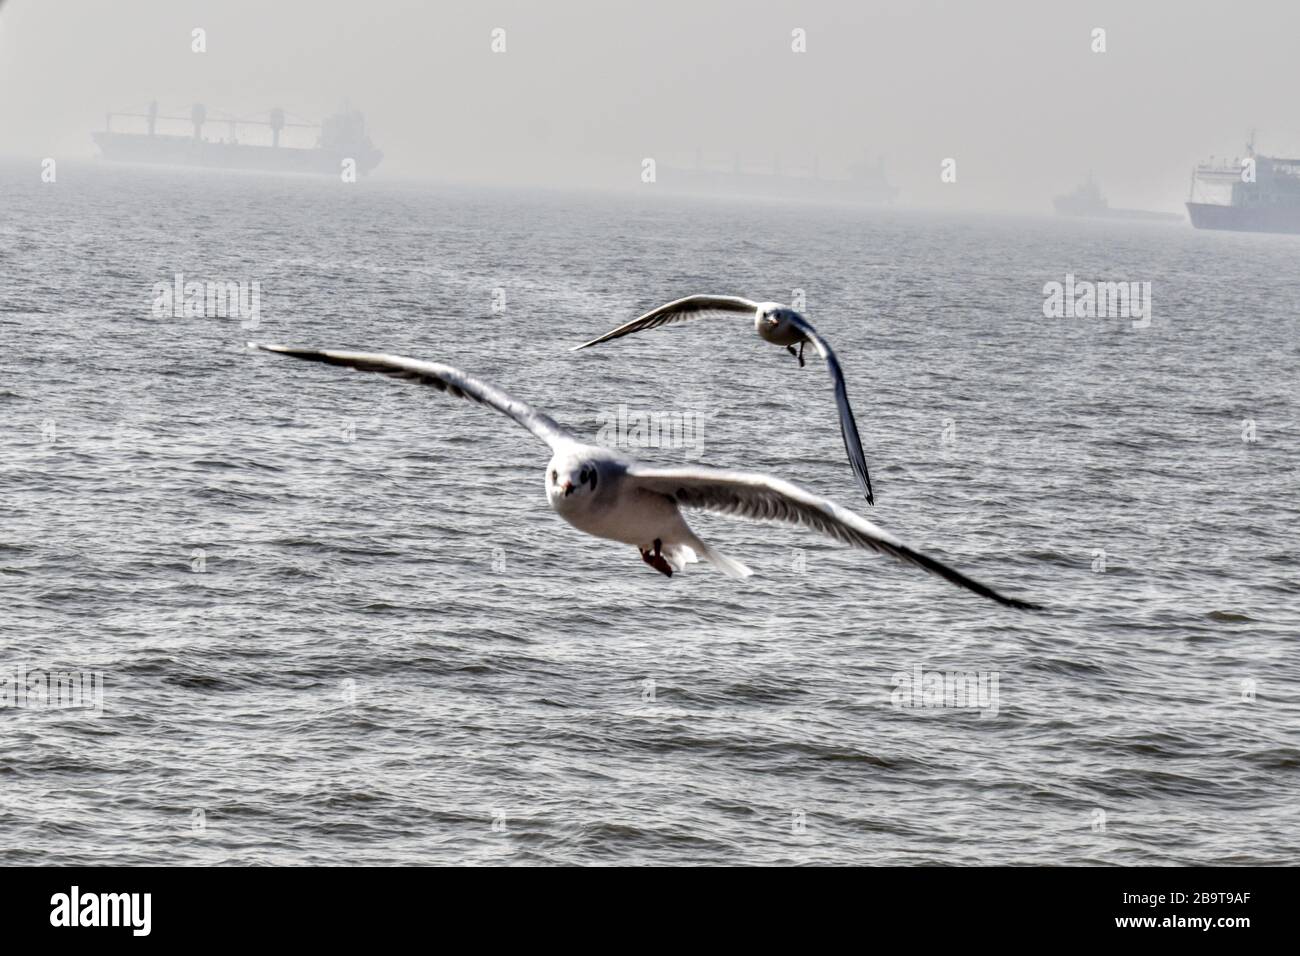 Two seagulls flying in smog near city Mumbai in India Stock Photo